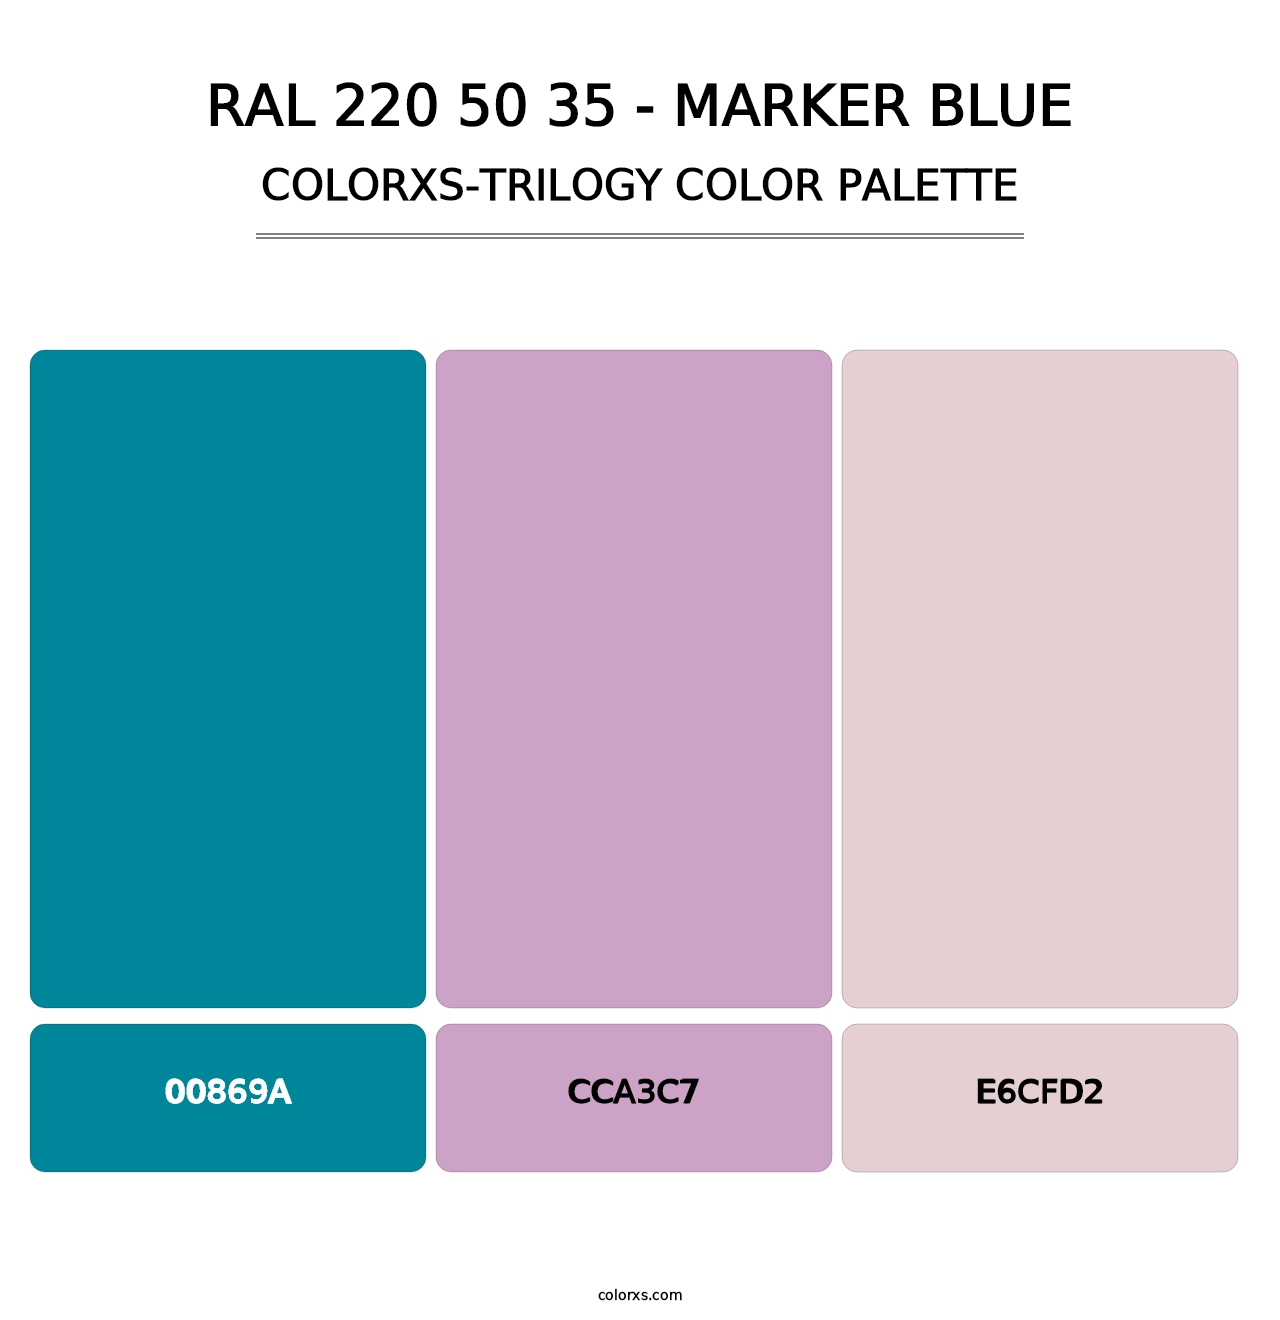 RAL 220 50 35 - Marker Blue - Colorxs Trilogy Palette